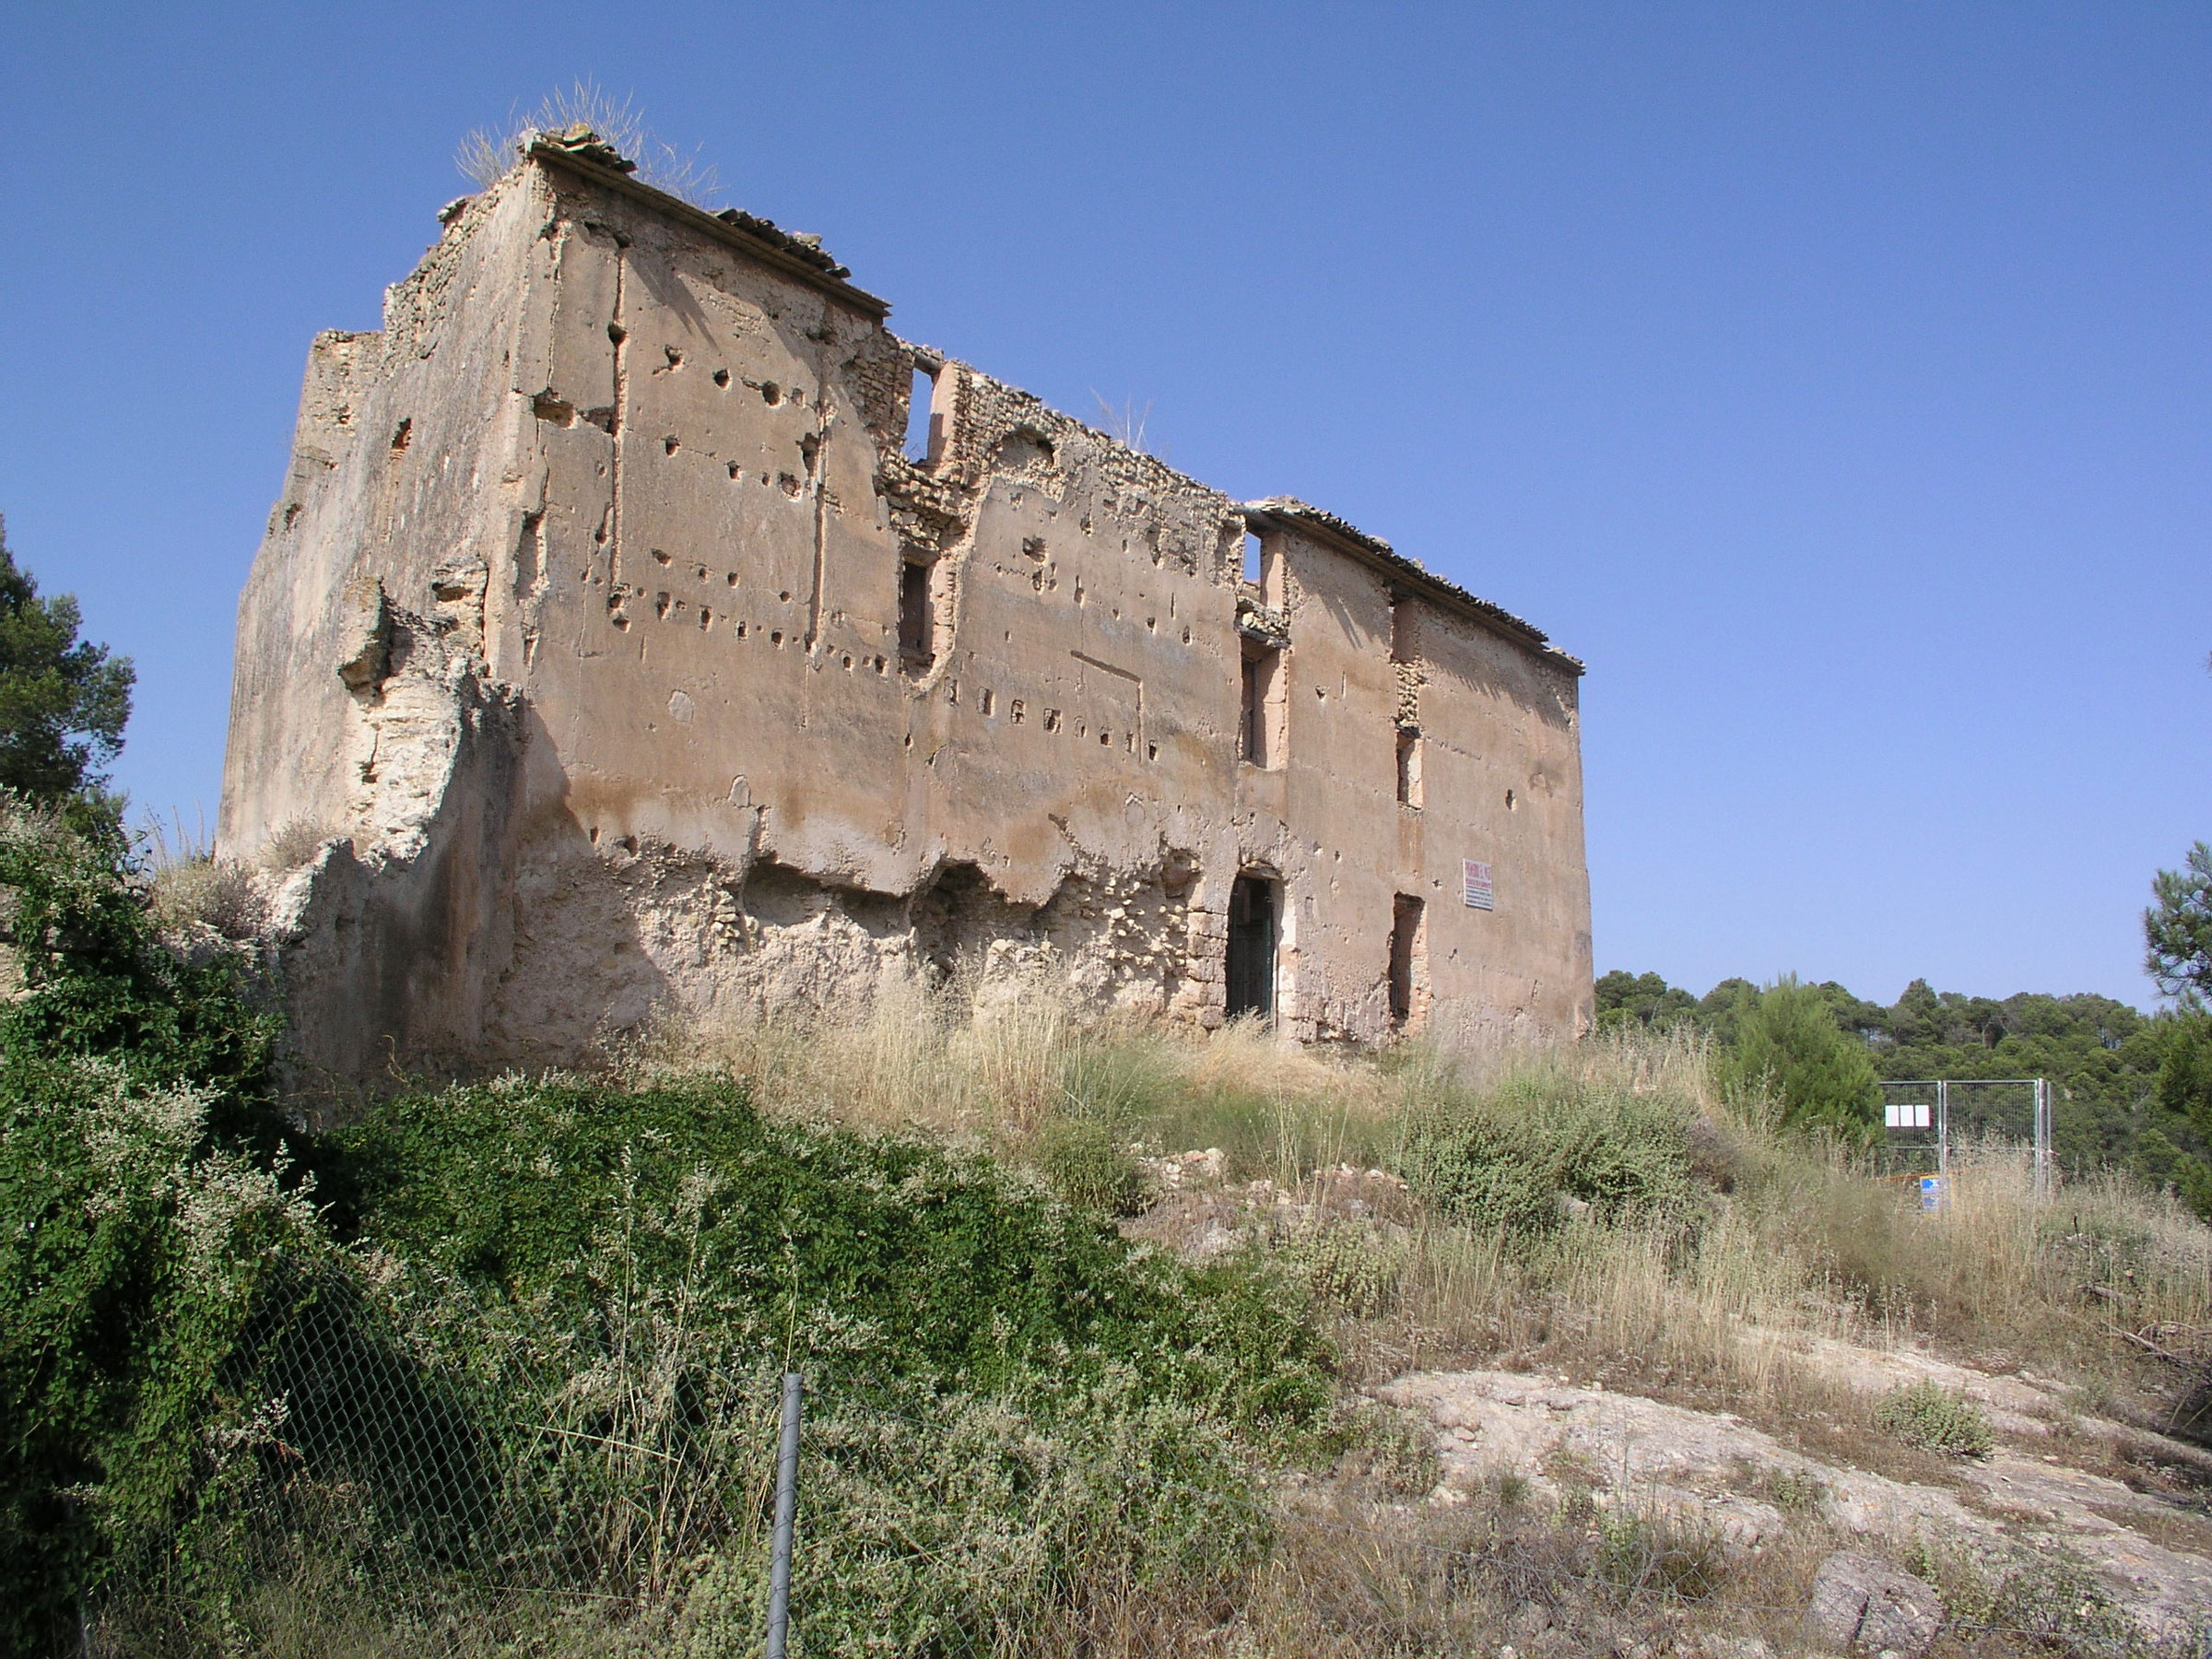 Lienzo sur del Castillo de Barxell. Alcoy